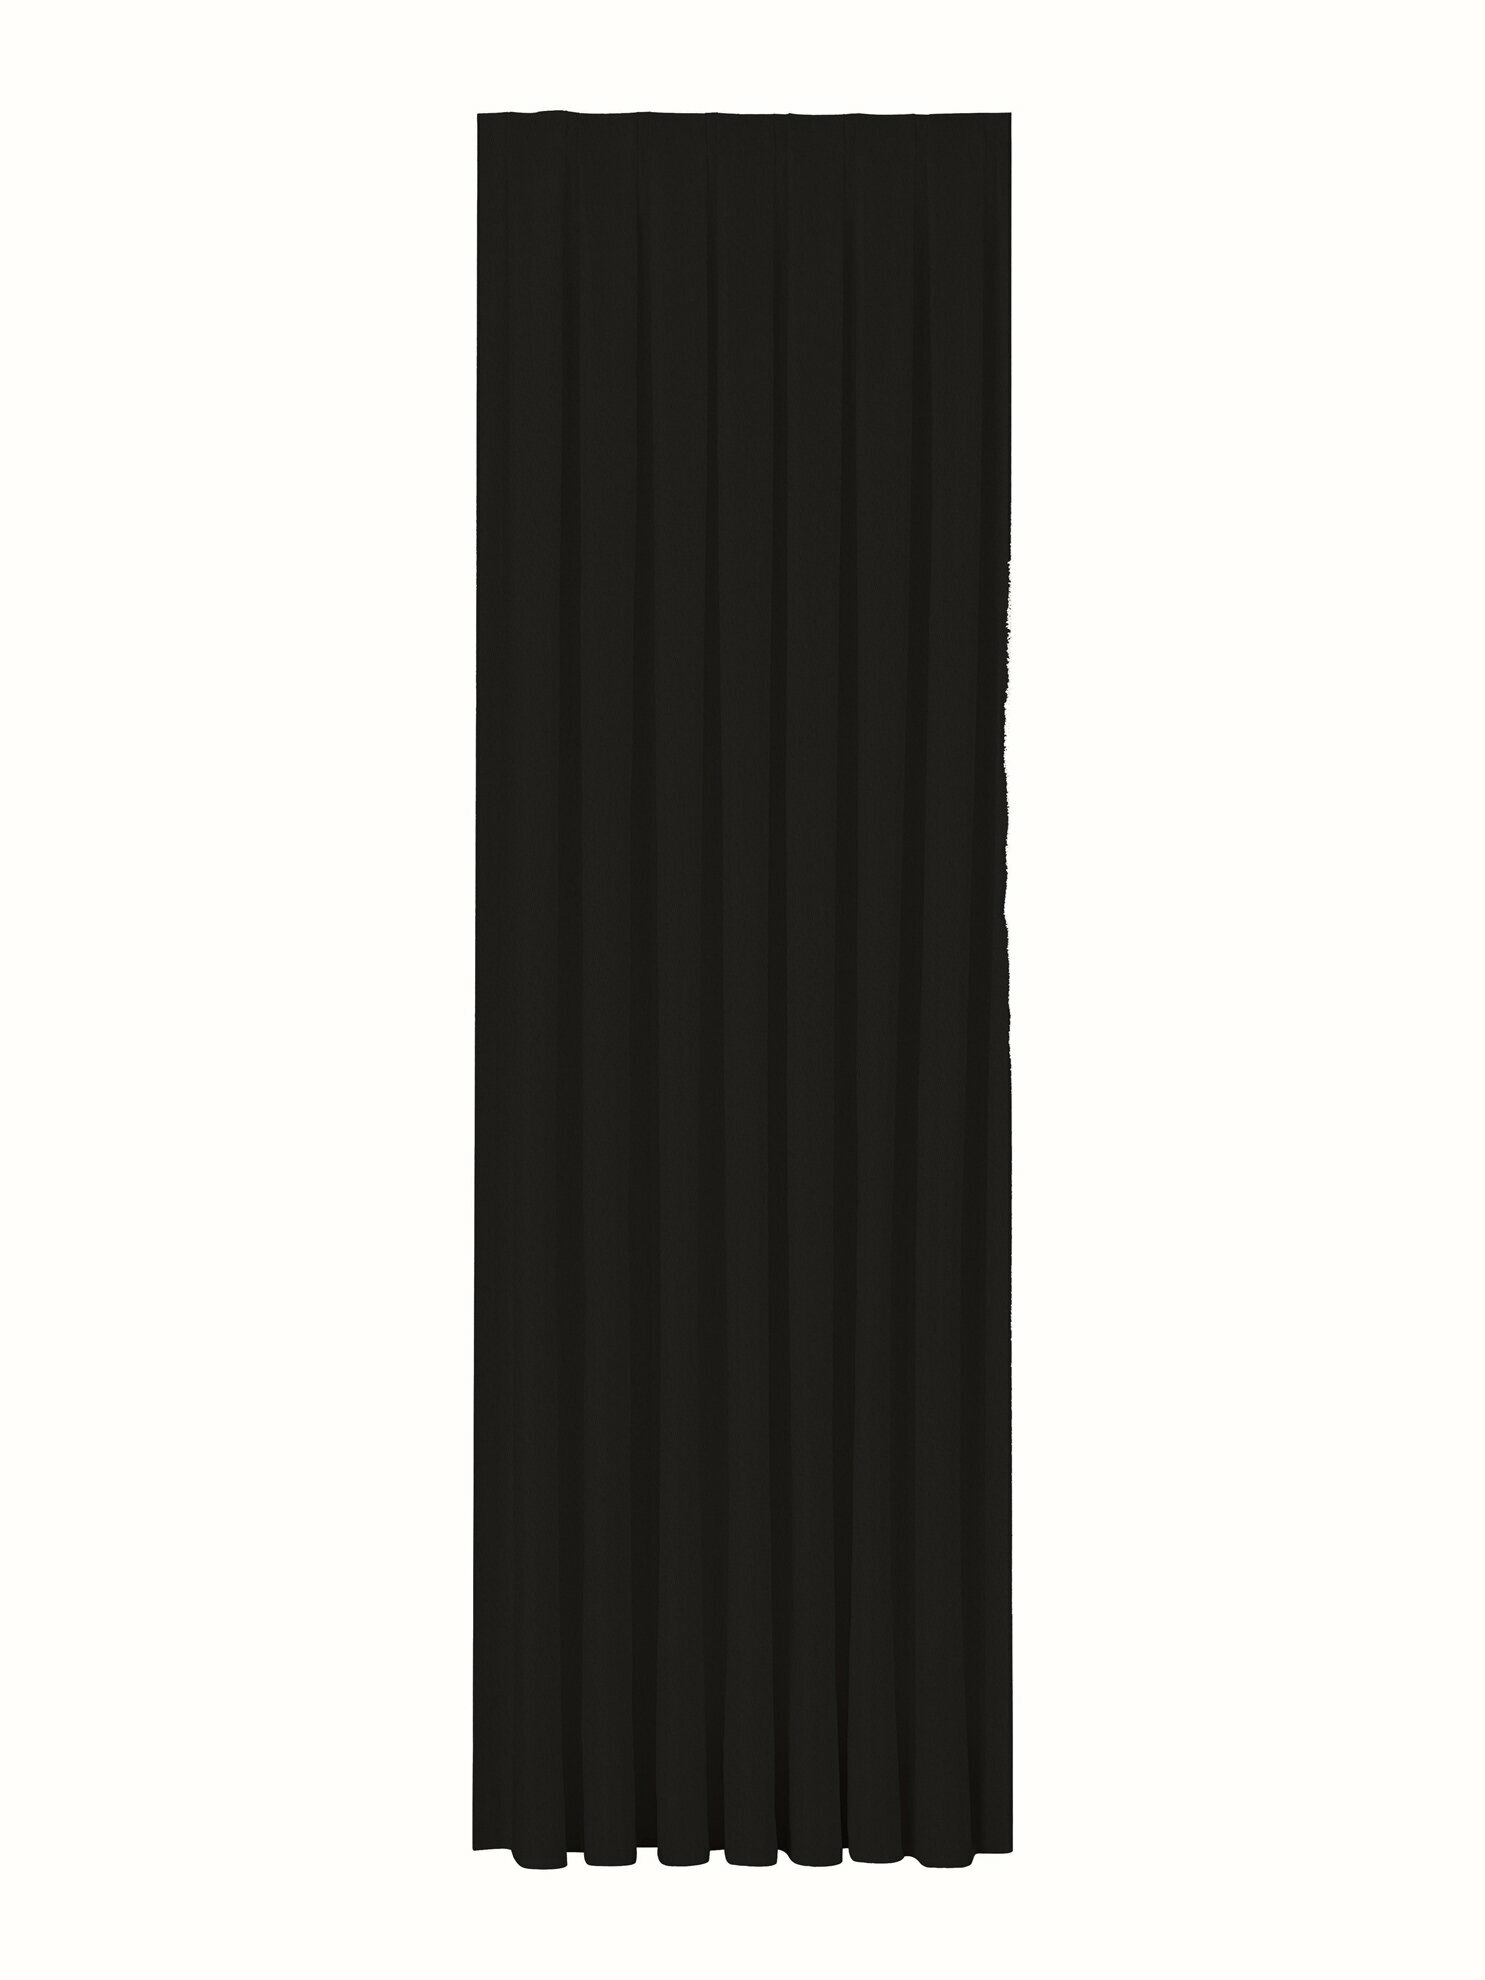 resm Taç Karartma Fon Perde Siyah ( Max Yükseklik : 280 cm )